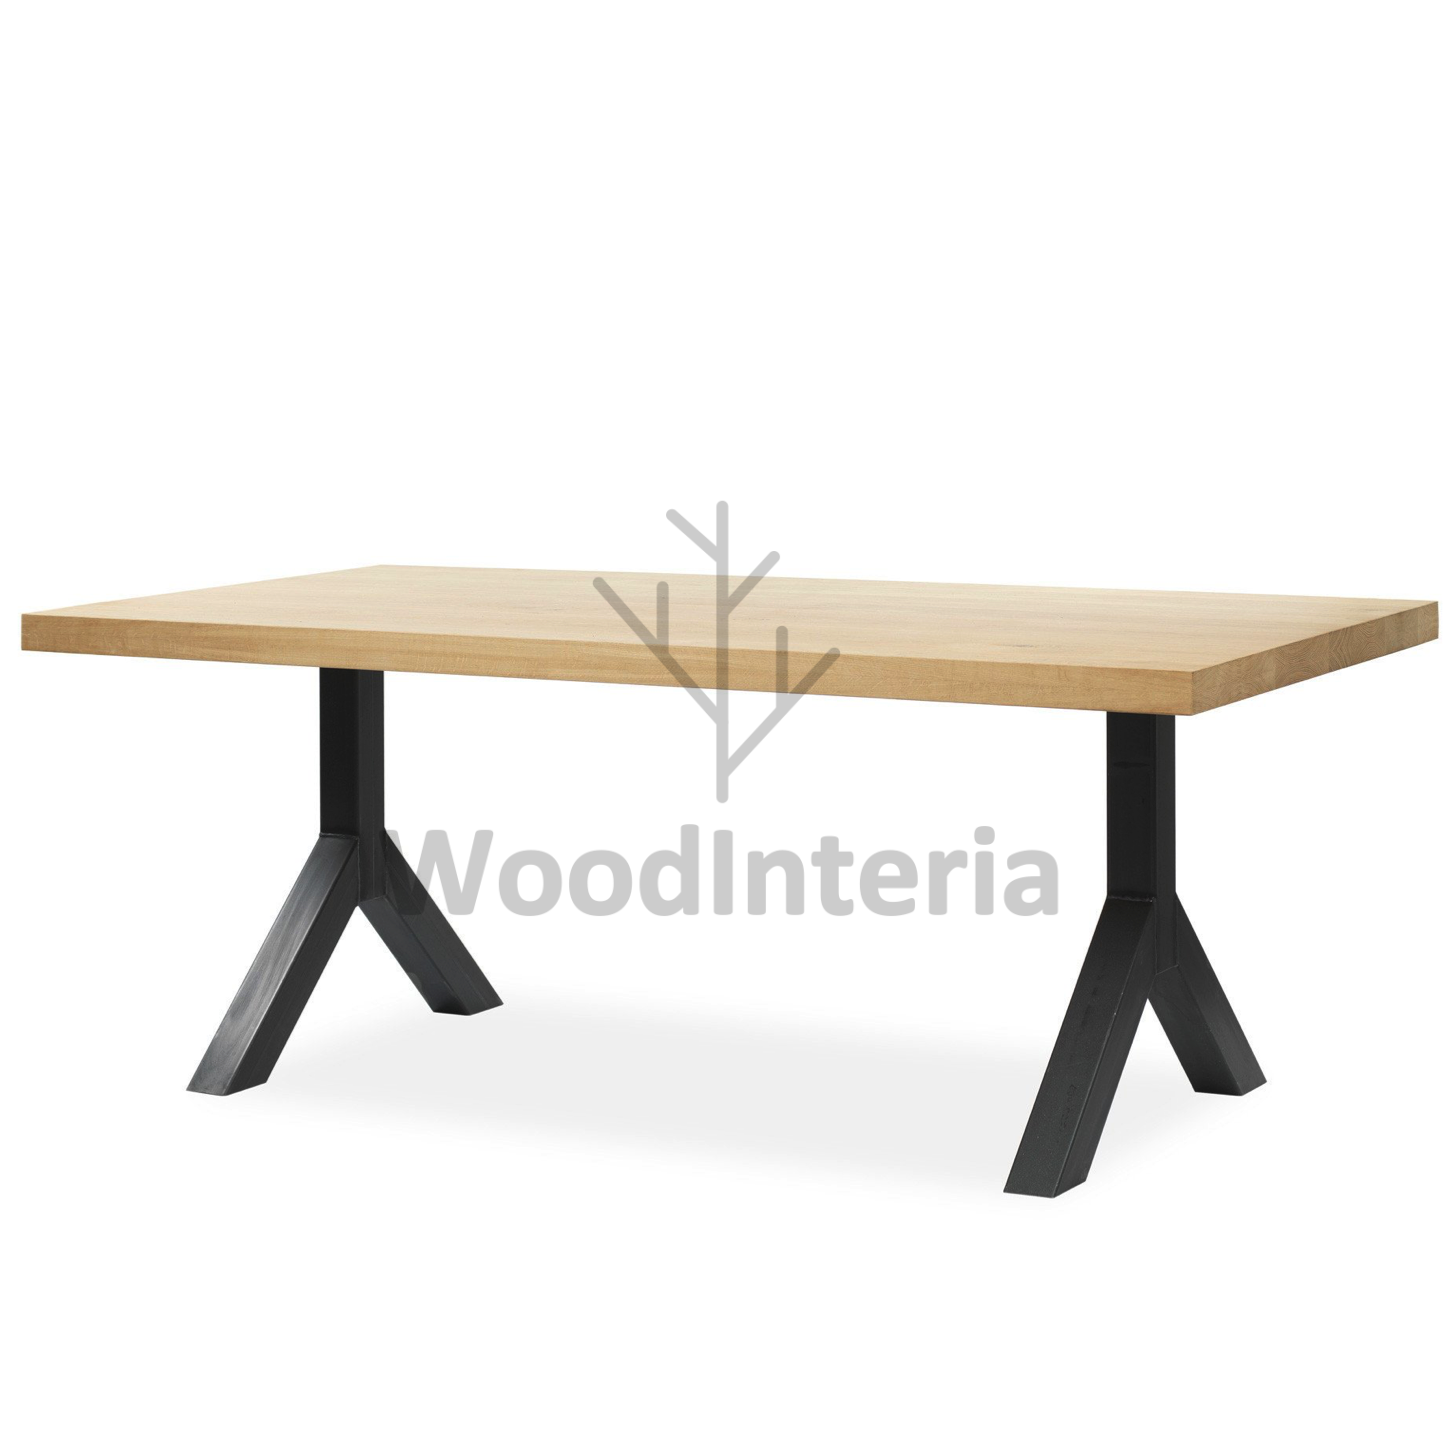 фото обеденный стол double top yy dining в стиле лофт эко | WoodInteria